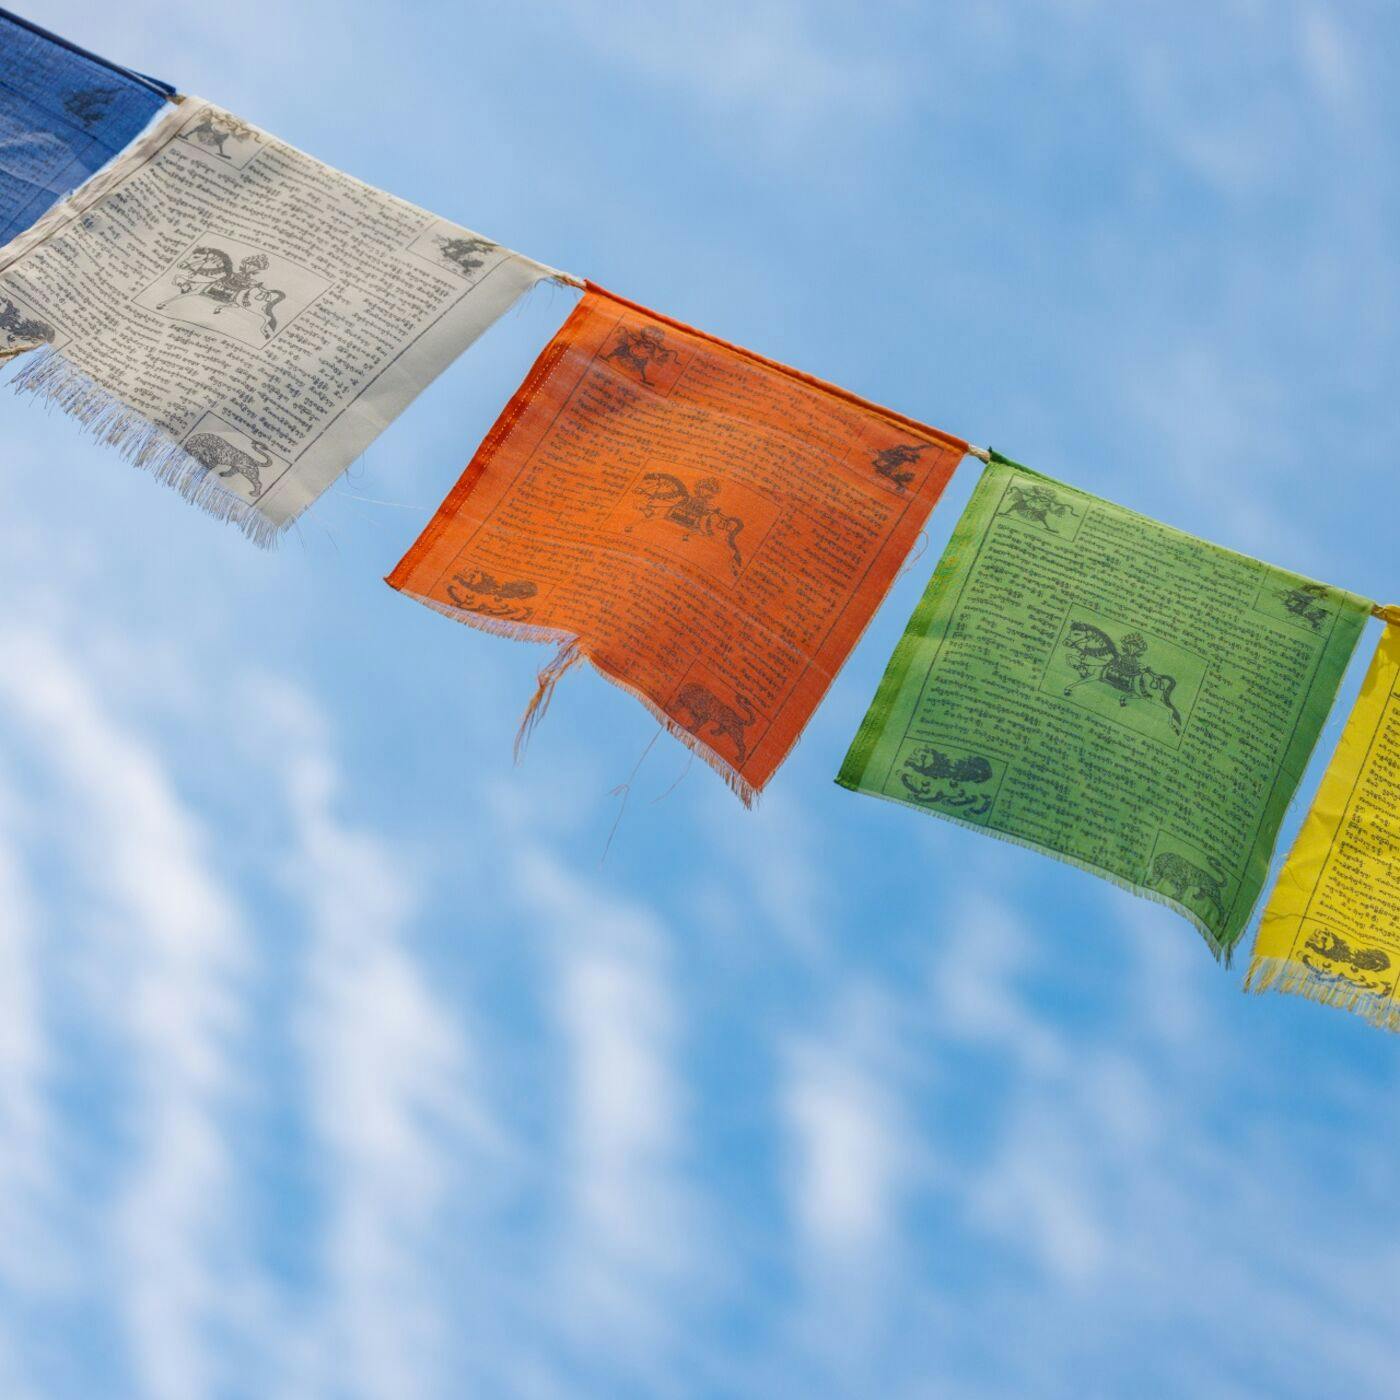 Seeking Bluer Skies: Three Months in a Remote Buddhist Monastery